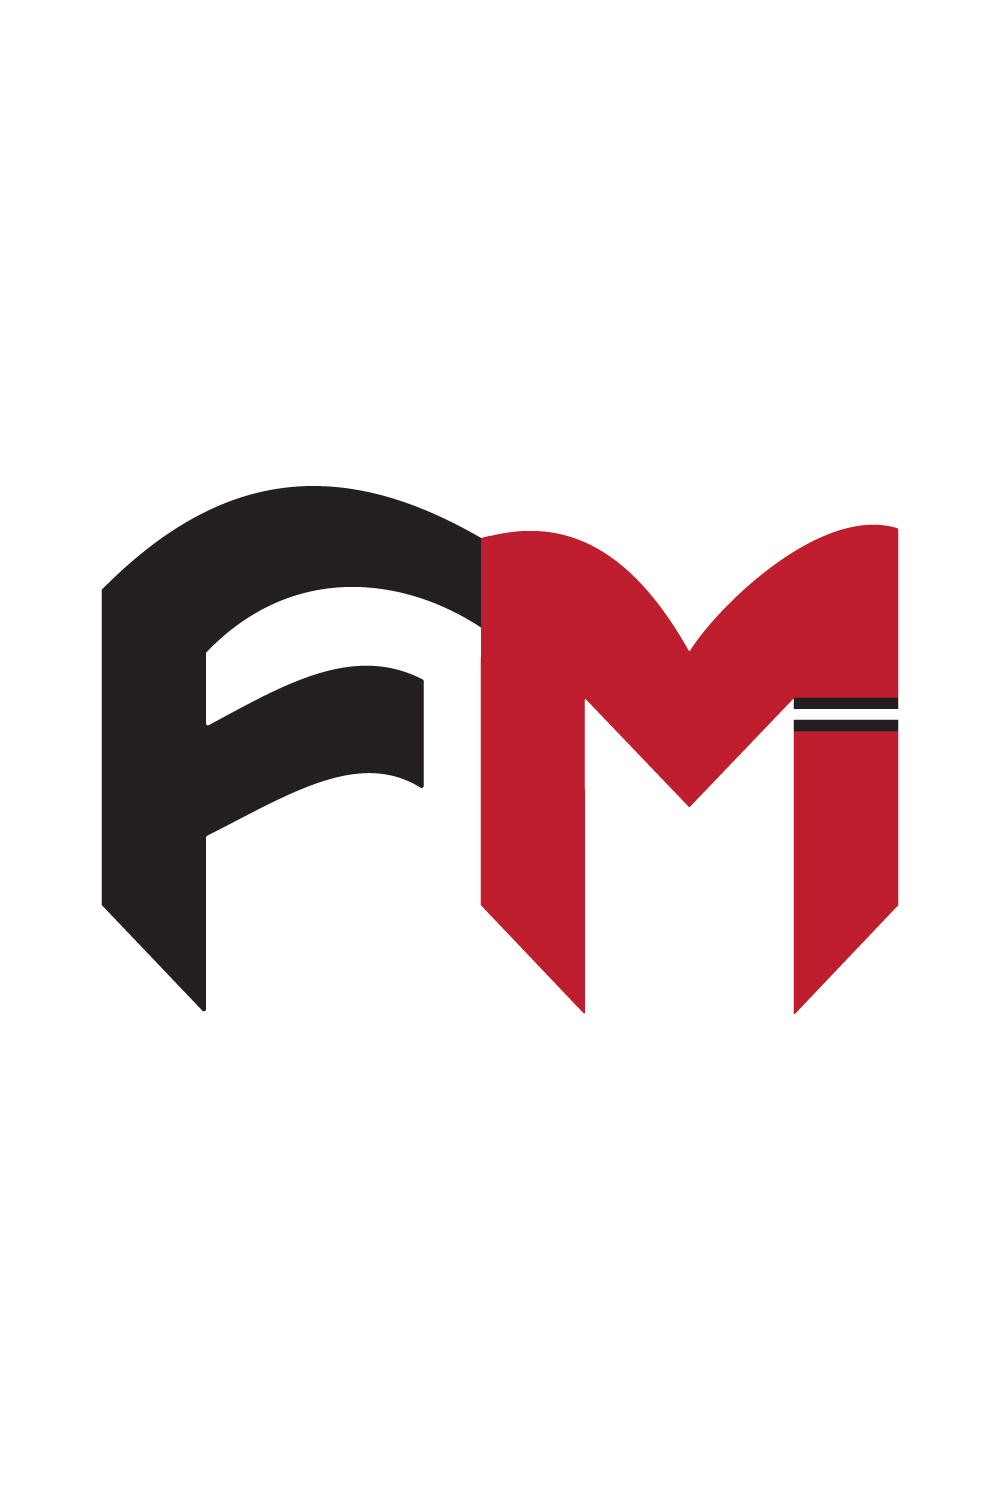 FM letters logo vector icon design FM logo template icon best company identity MF logo monogram design pinterest preview image.